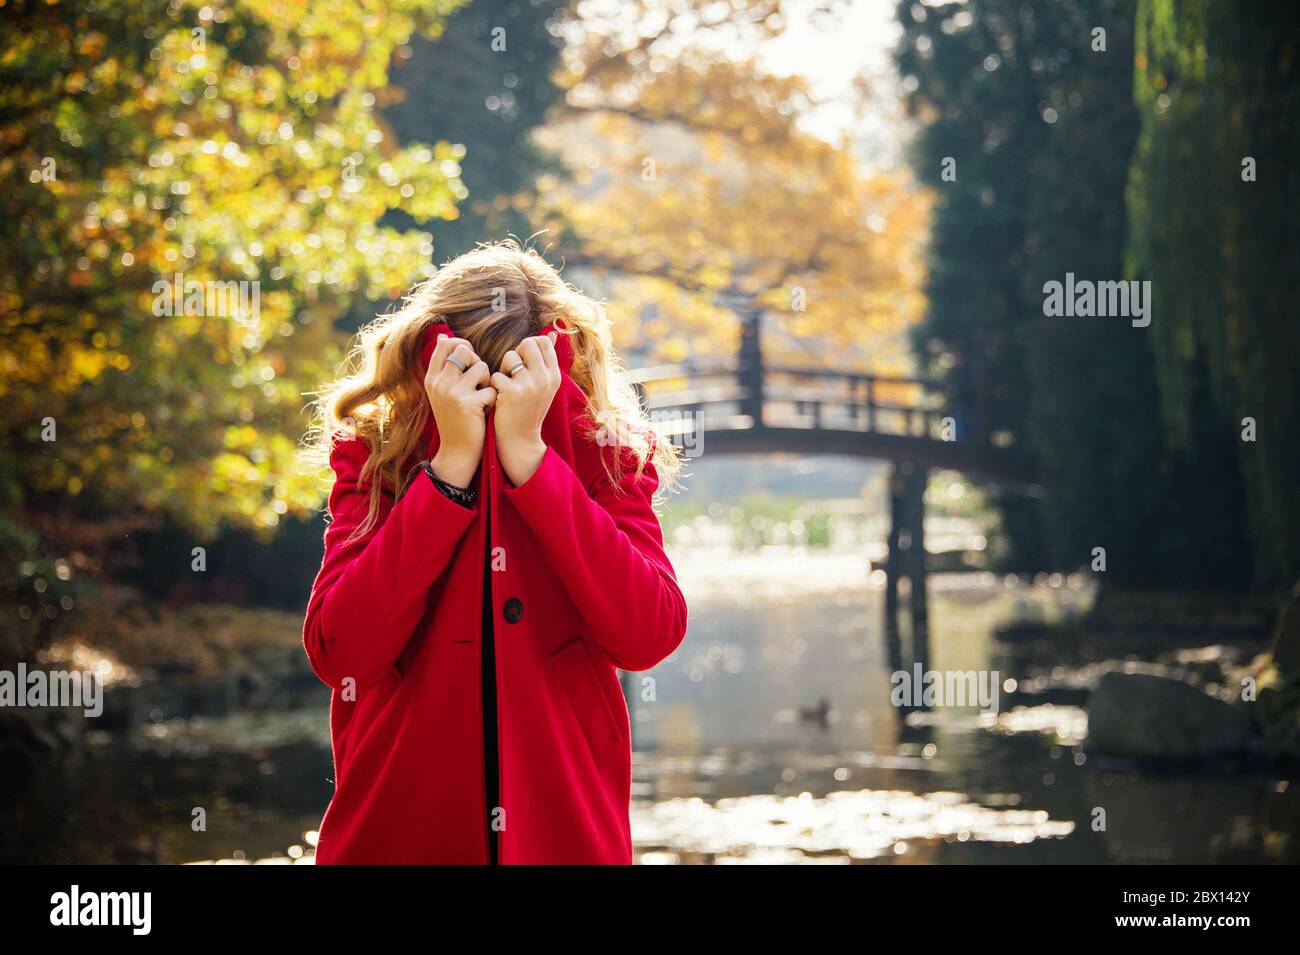 Junge Frau versteckt sich unter rotem Mantel im Herbst Stadtpark in der Nähe des Sees Stockfoto